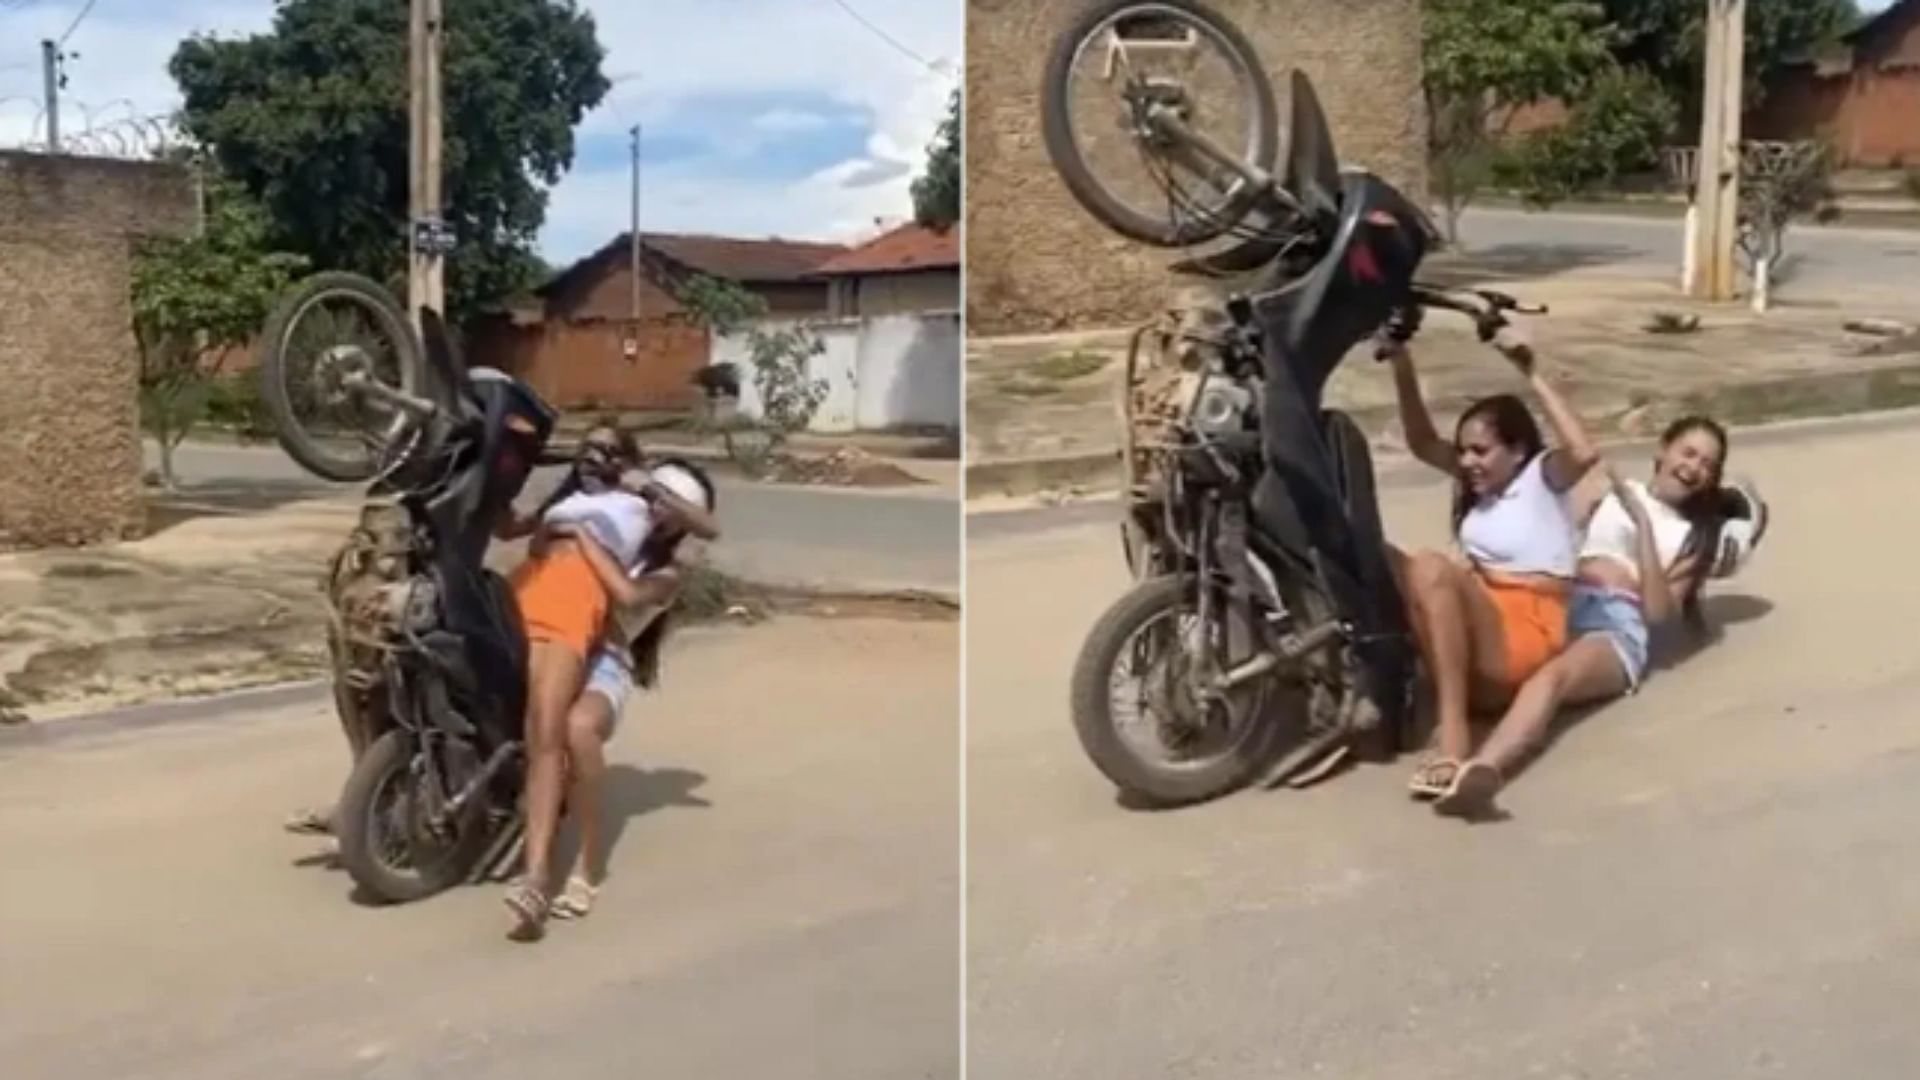 Papa Ki Pari' did such a stunt on the bike video went viral on social media